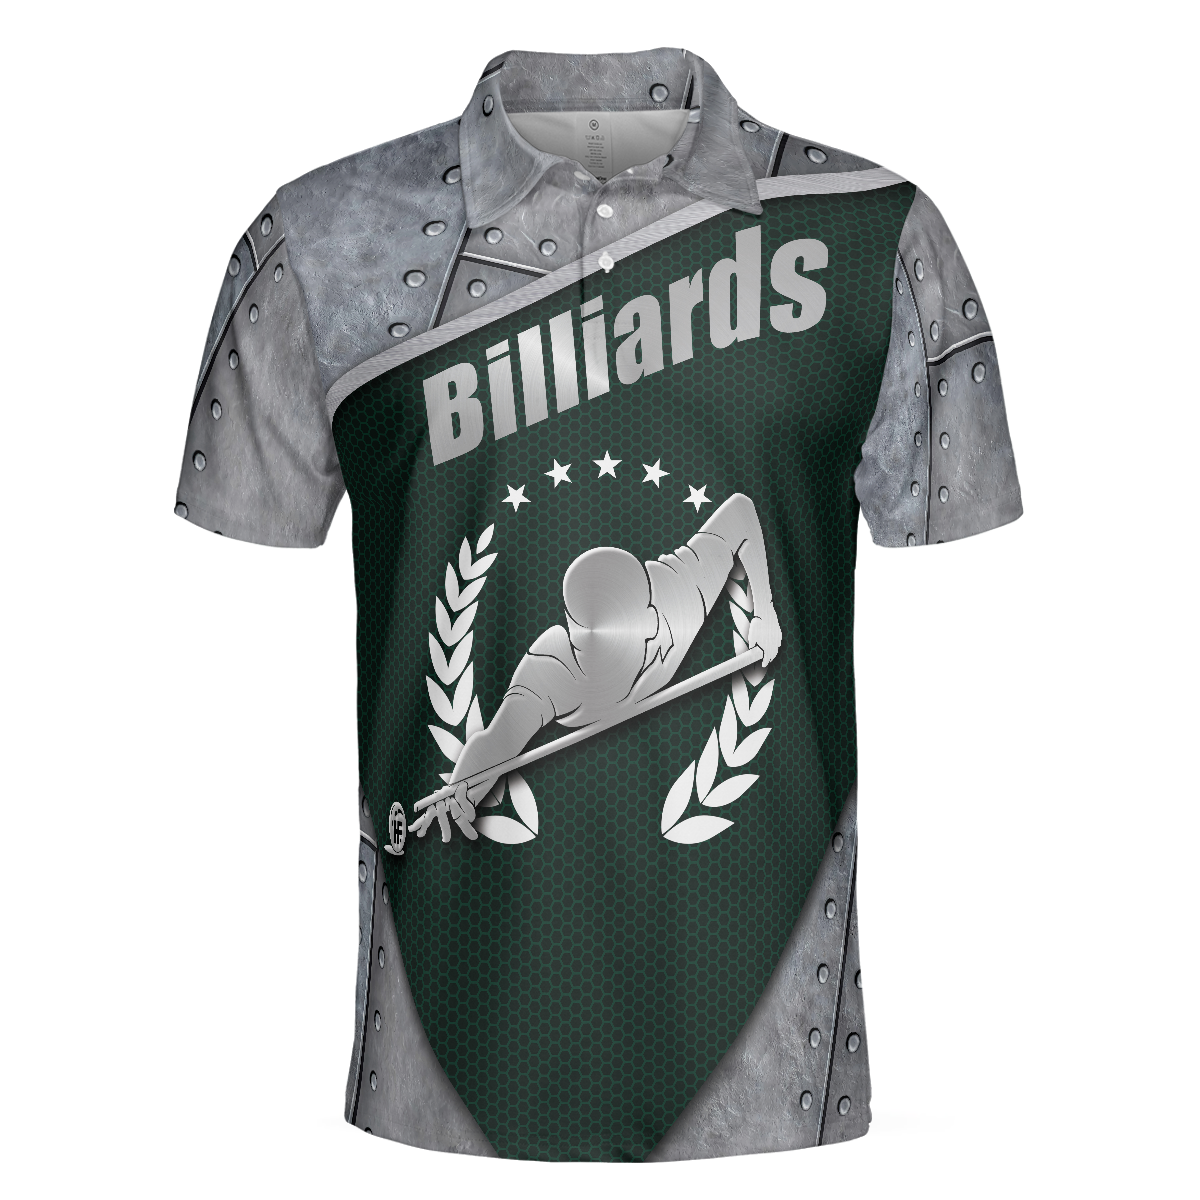 Billiards Steel Pattern Polo Shirt Cool Pool Player Billiards Shirt For Men/ Birthday Gift for Billiard Player